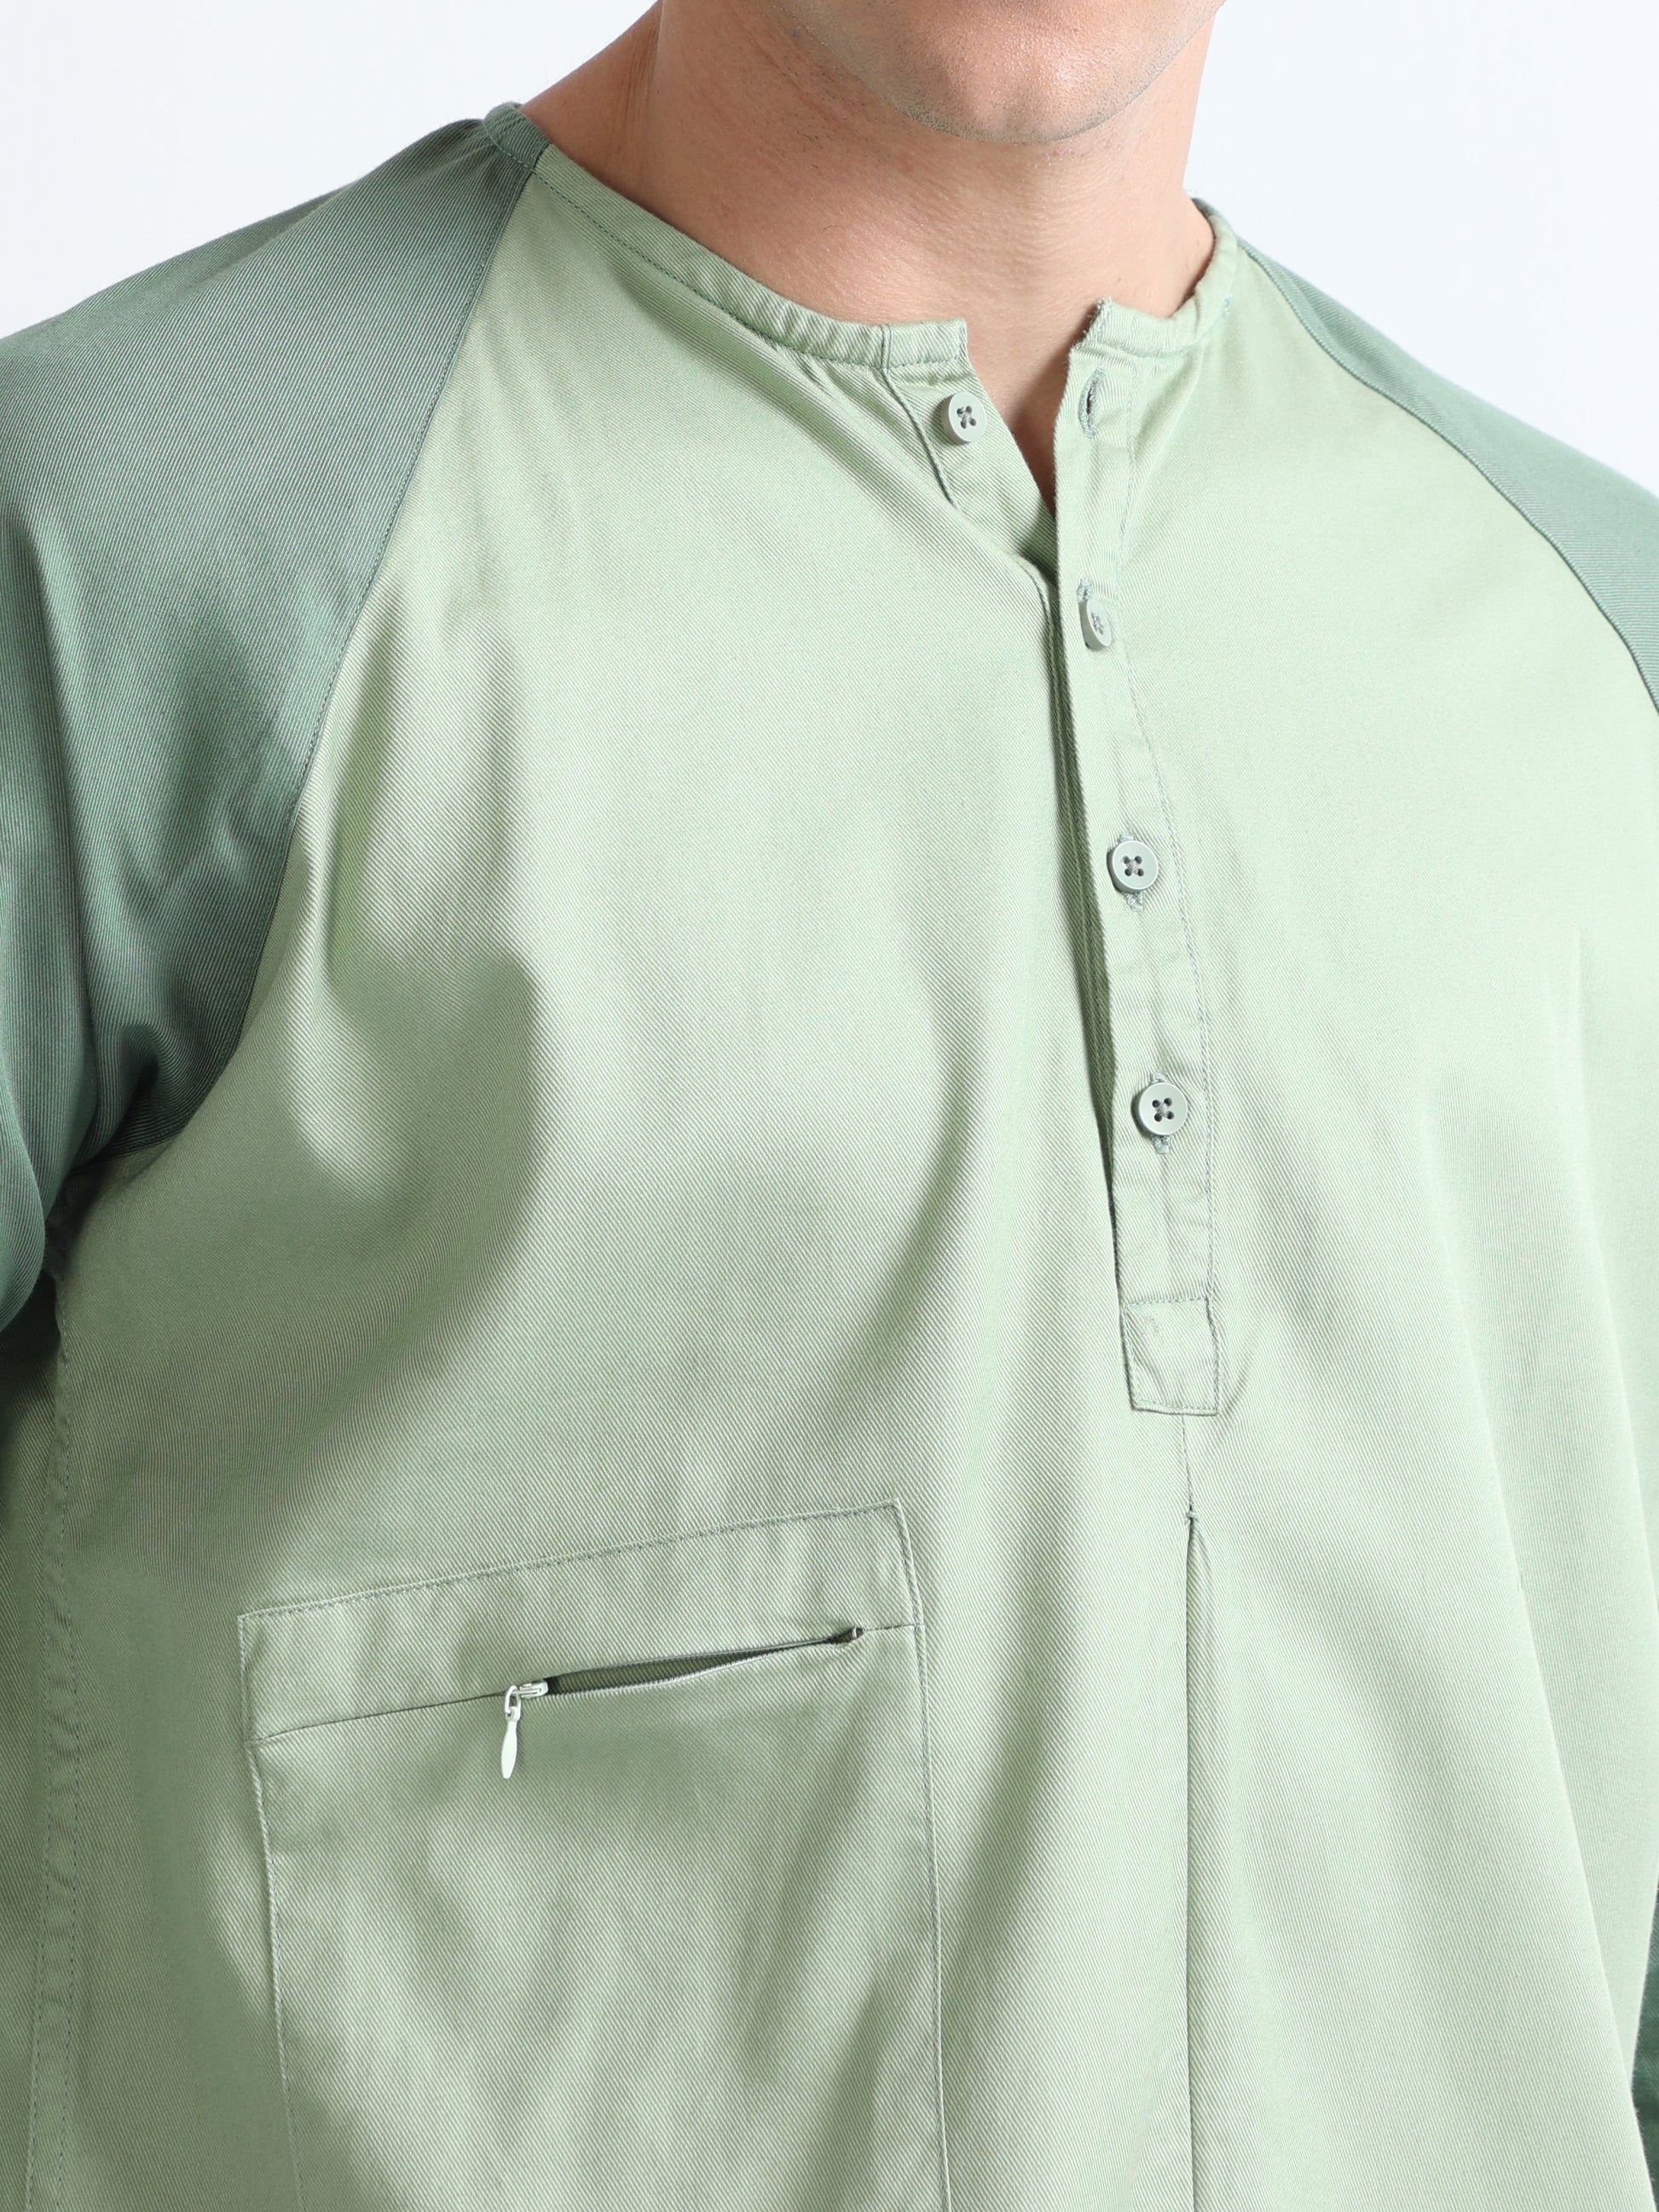 Buy Raglan Full Sleeves Panel Shirt Online.